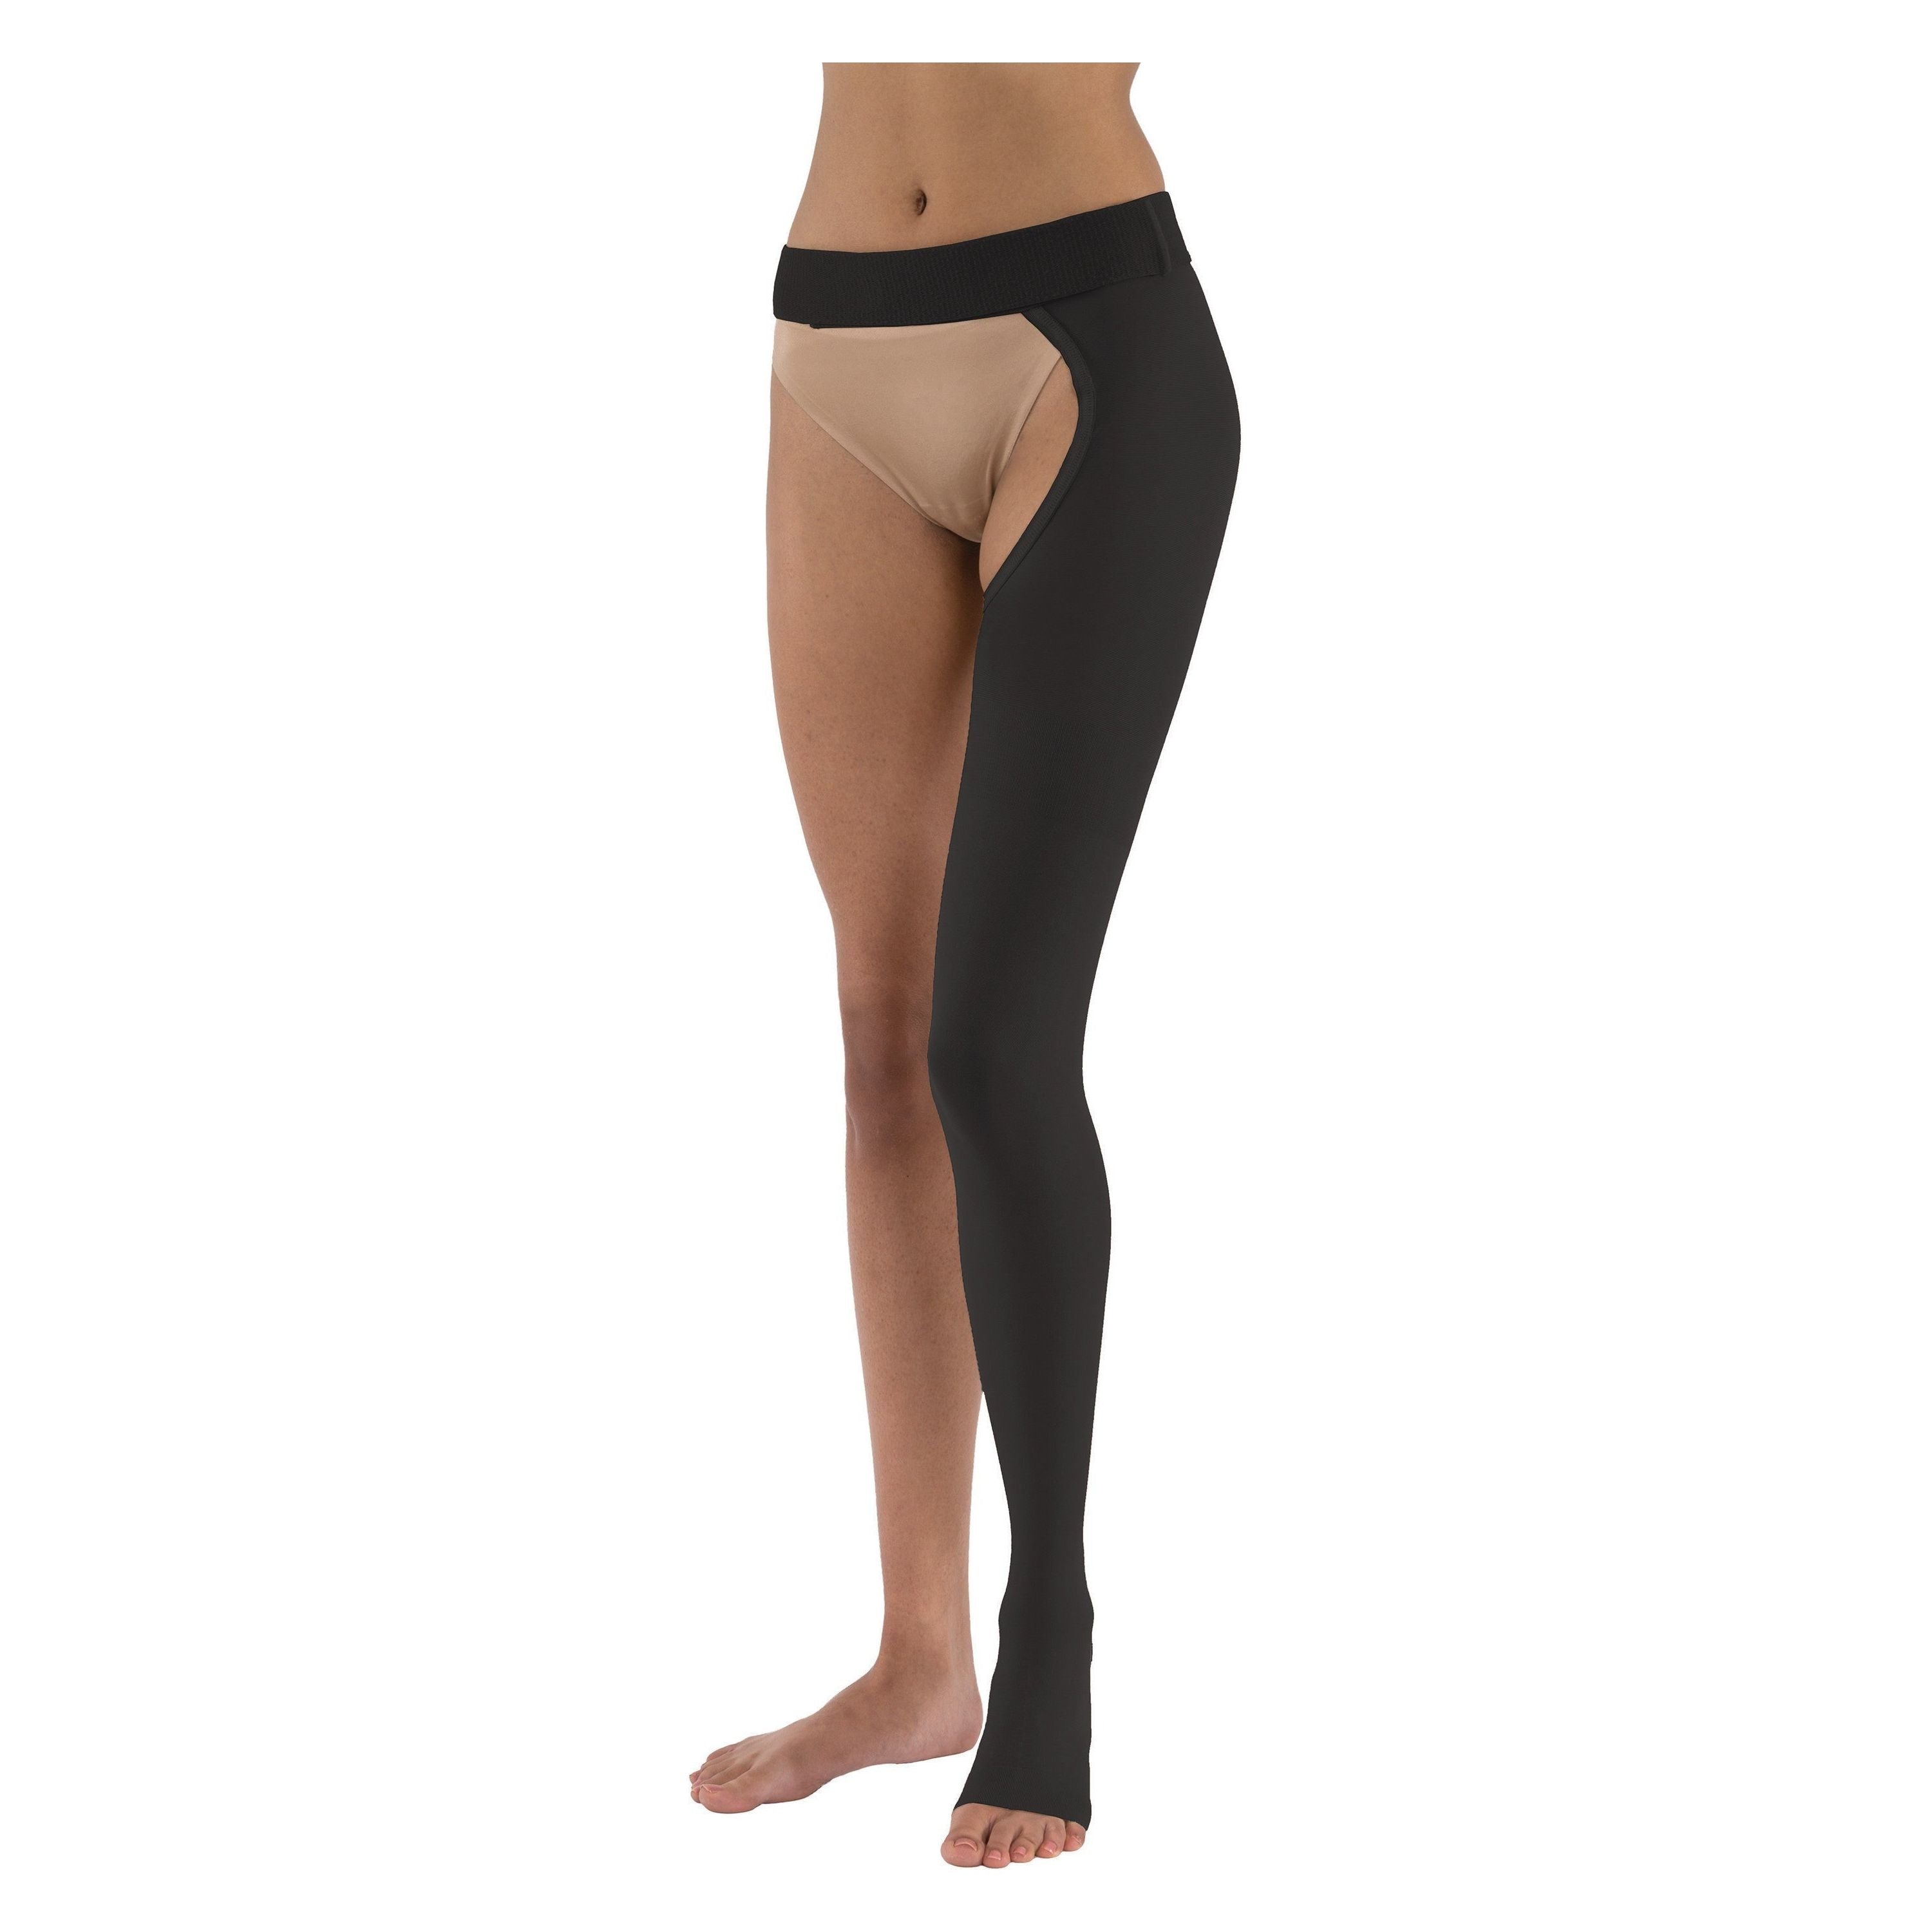 Amazon.com: Presadee Thigh High Open Toe 20-30 mmHg Firm Compression Leg  with YKK Zipper (Black, 3) : Health & Household